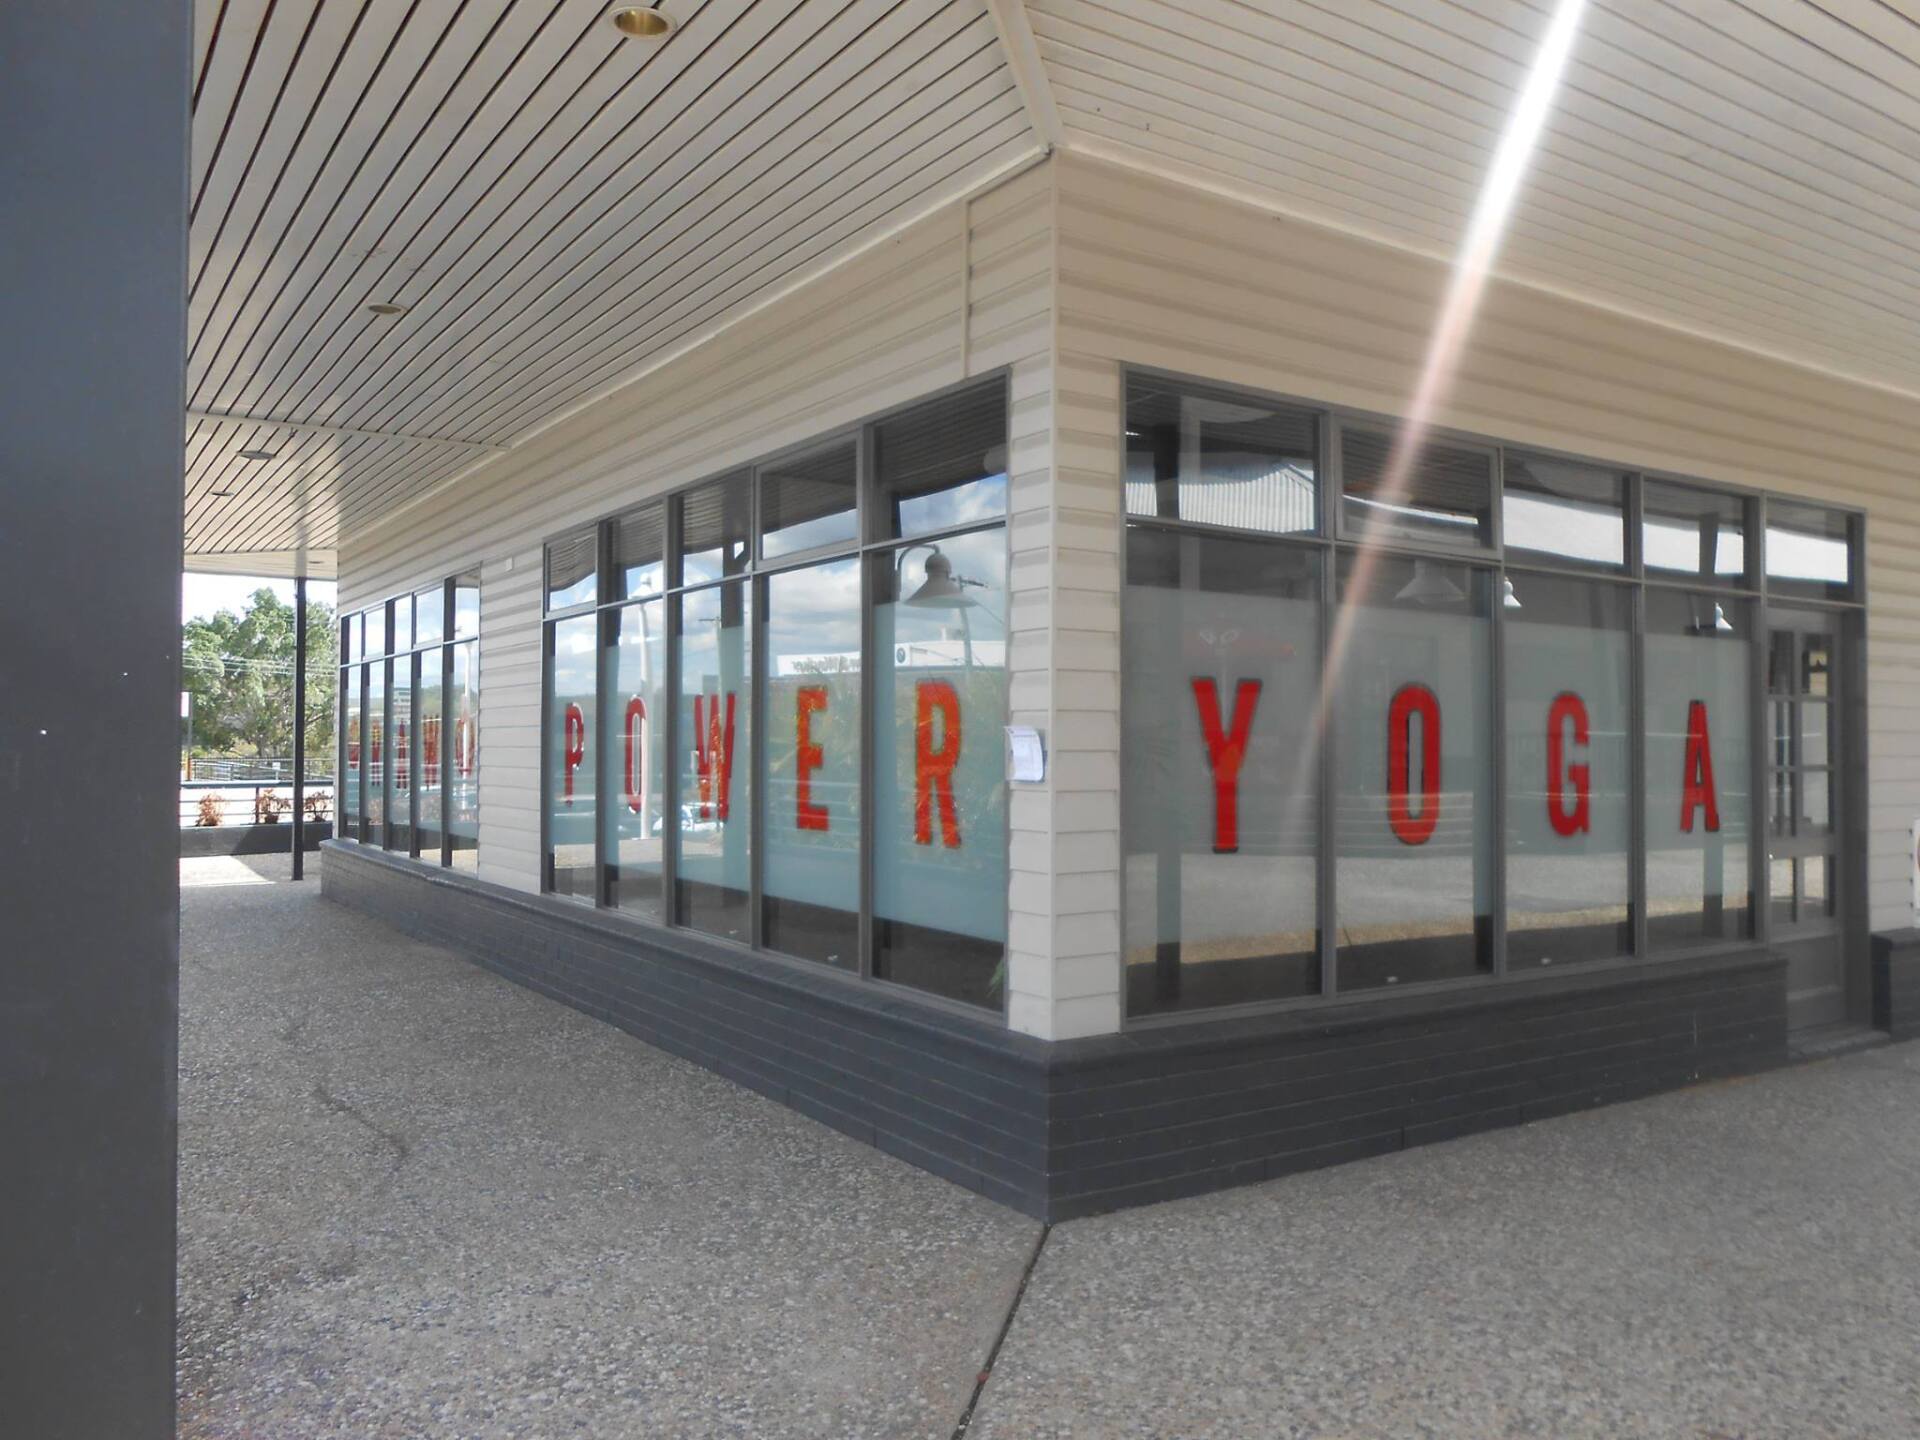 Power yoga window signage | Kallangur, QLD | AP Signs